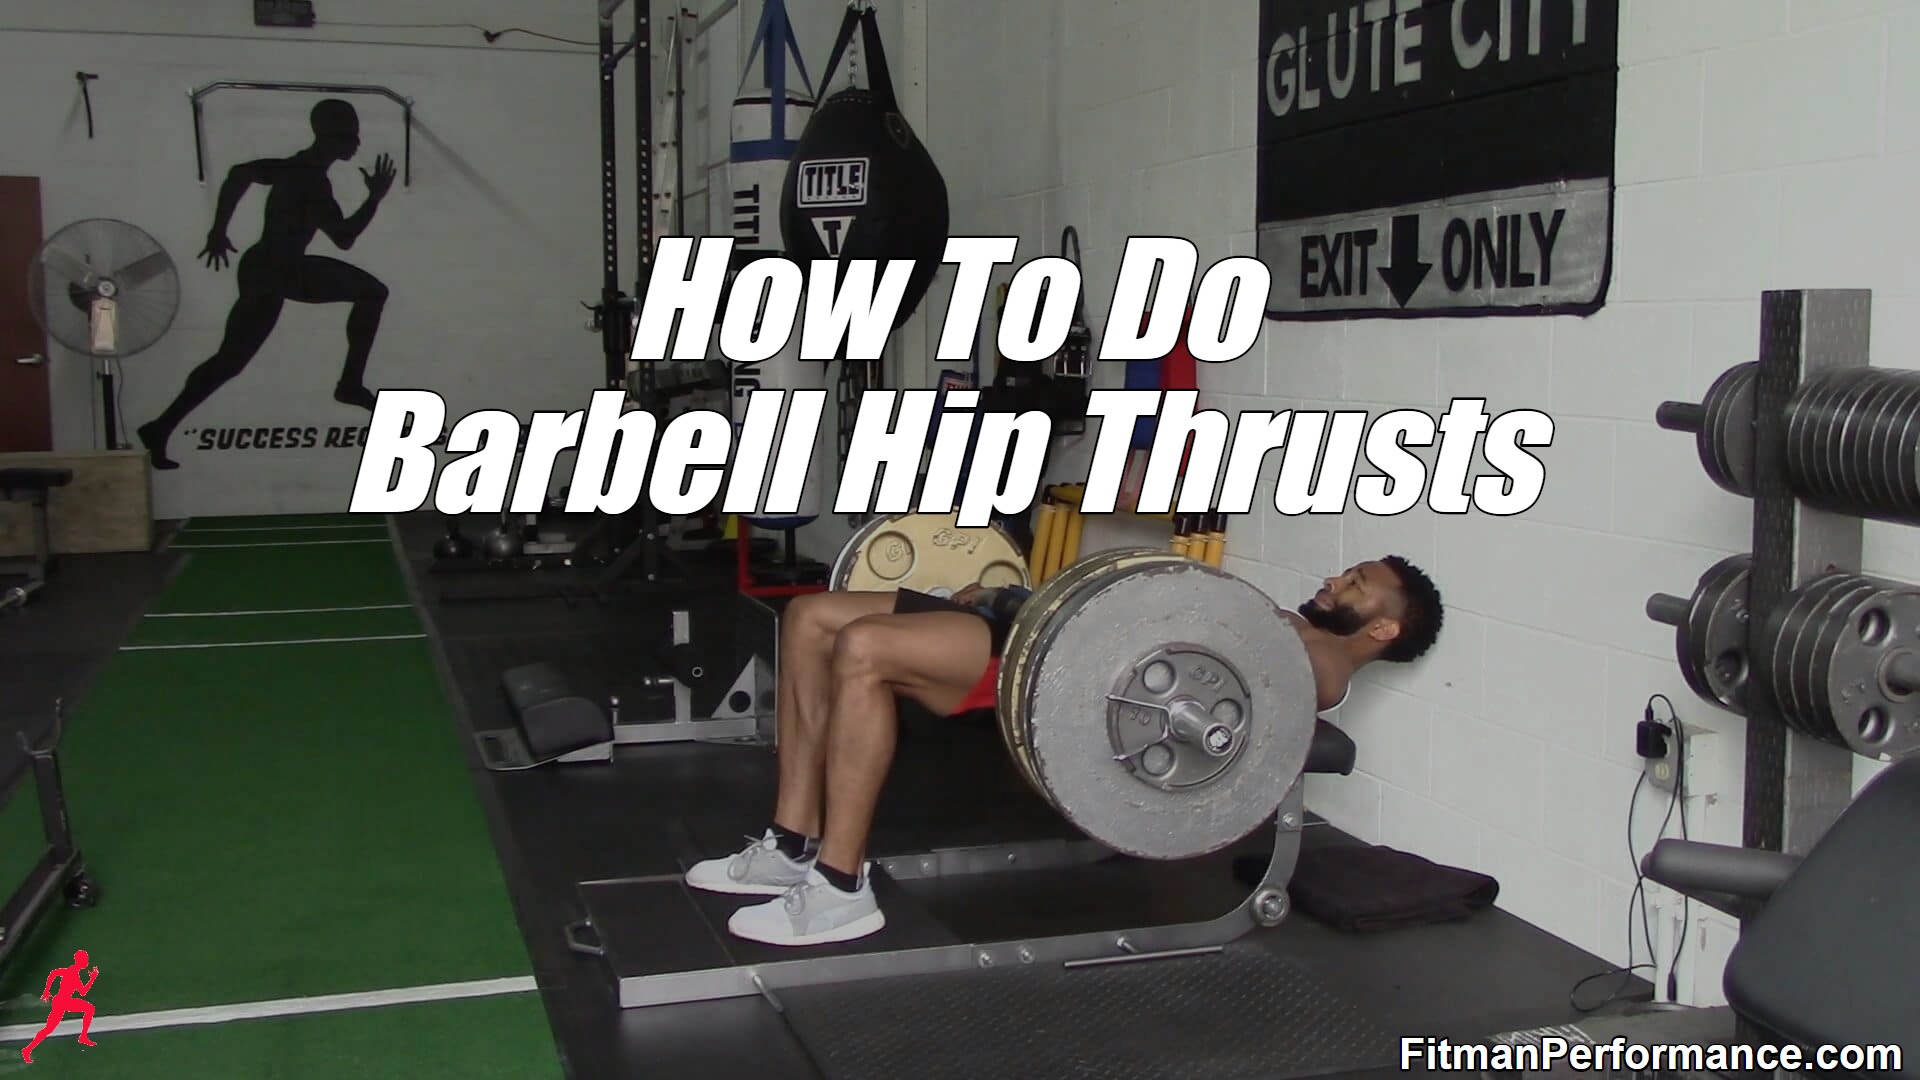 barbell hip thrusts